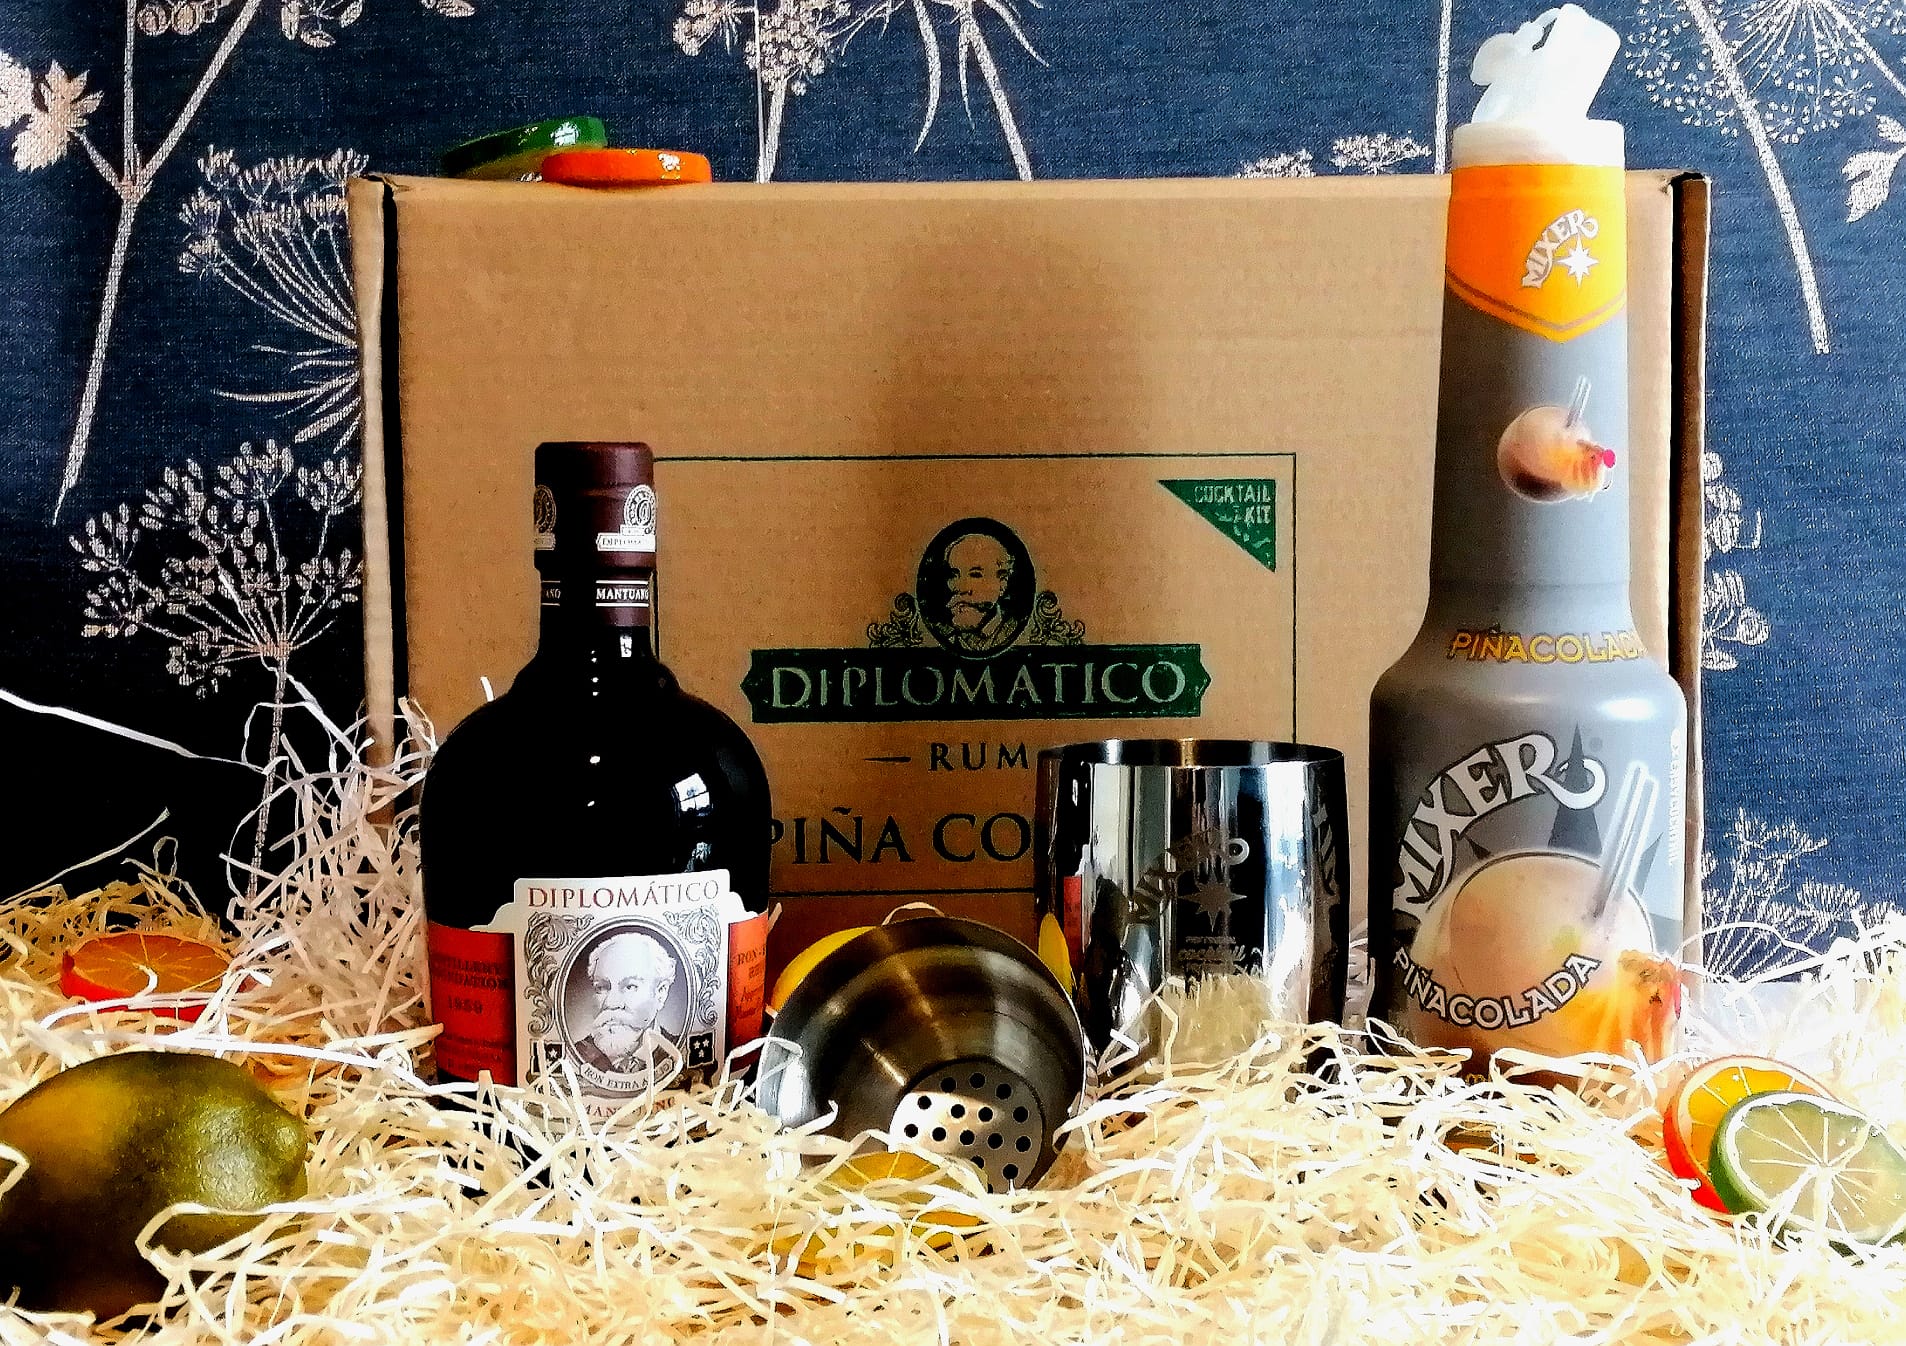 Diplomatico Rum Piña Colada Kit